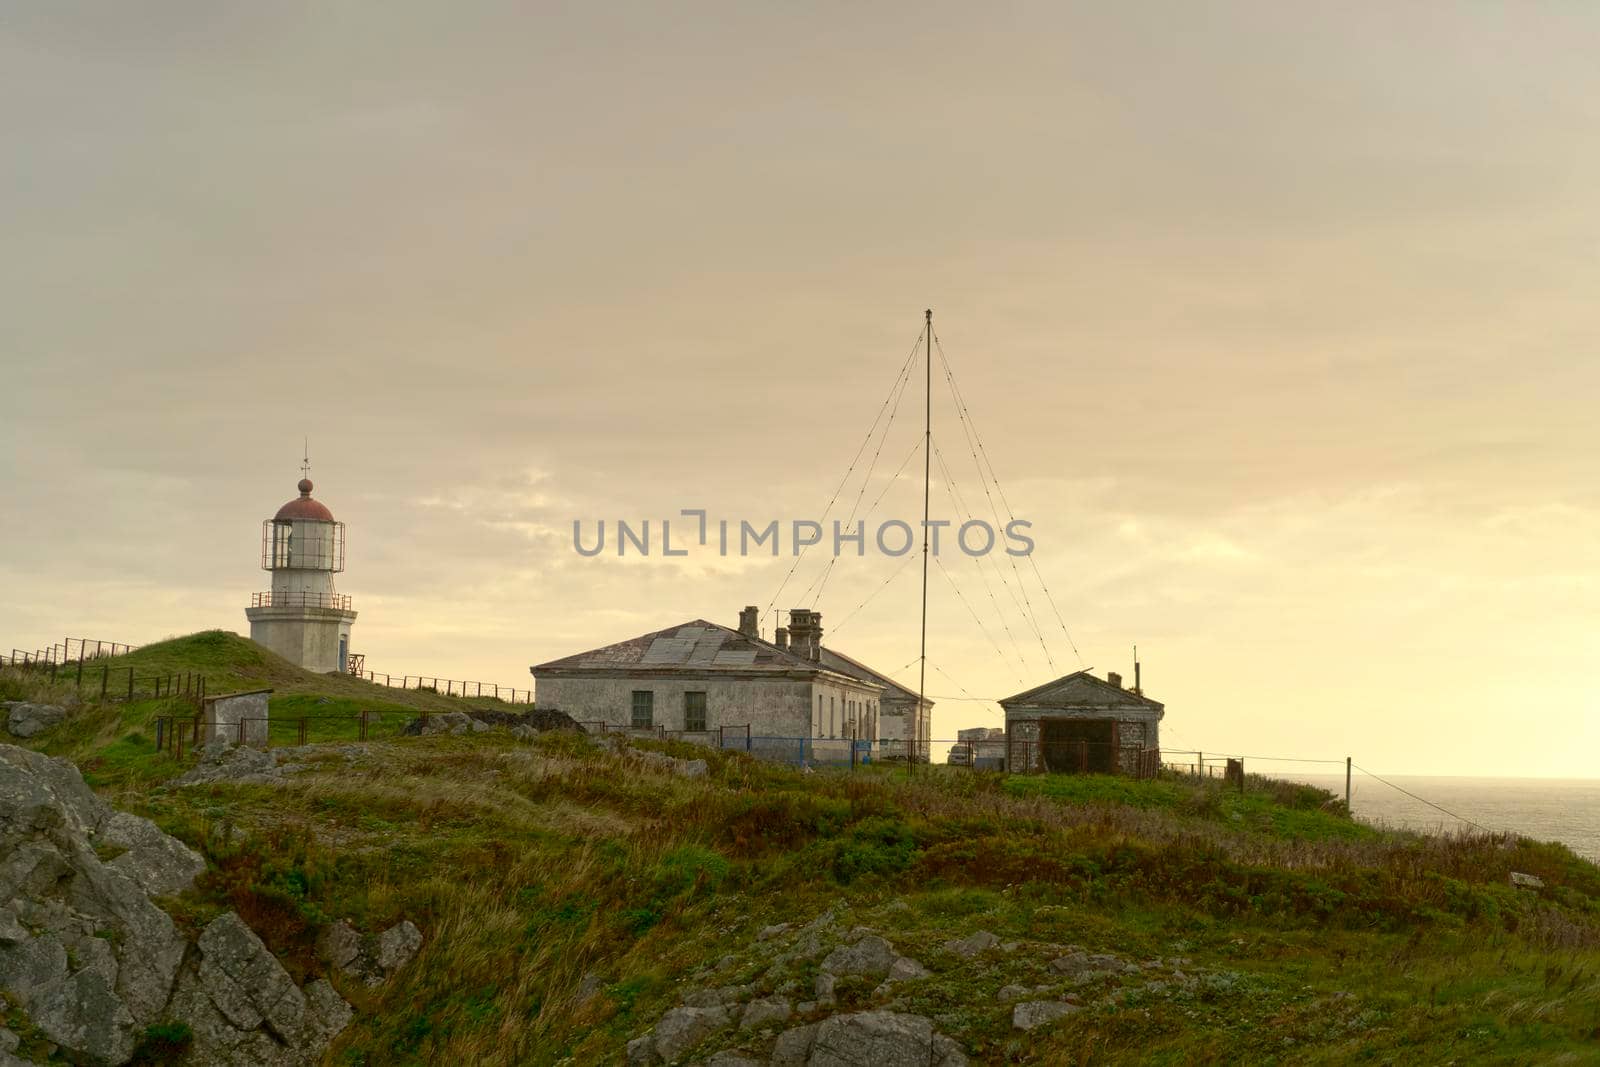 Landscape with a view of the ancient lighthouse. Cape Pospelova, Primorsky Krai